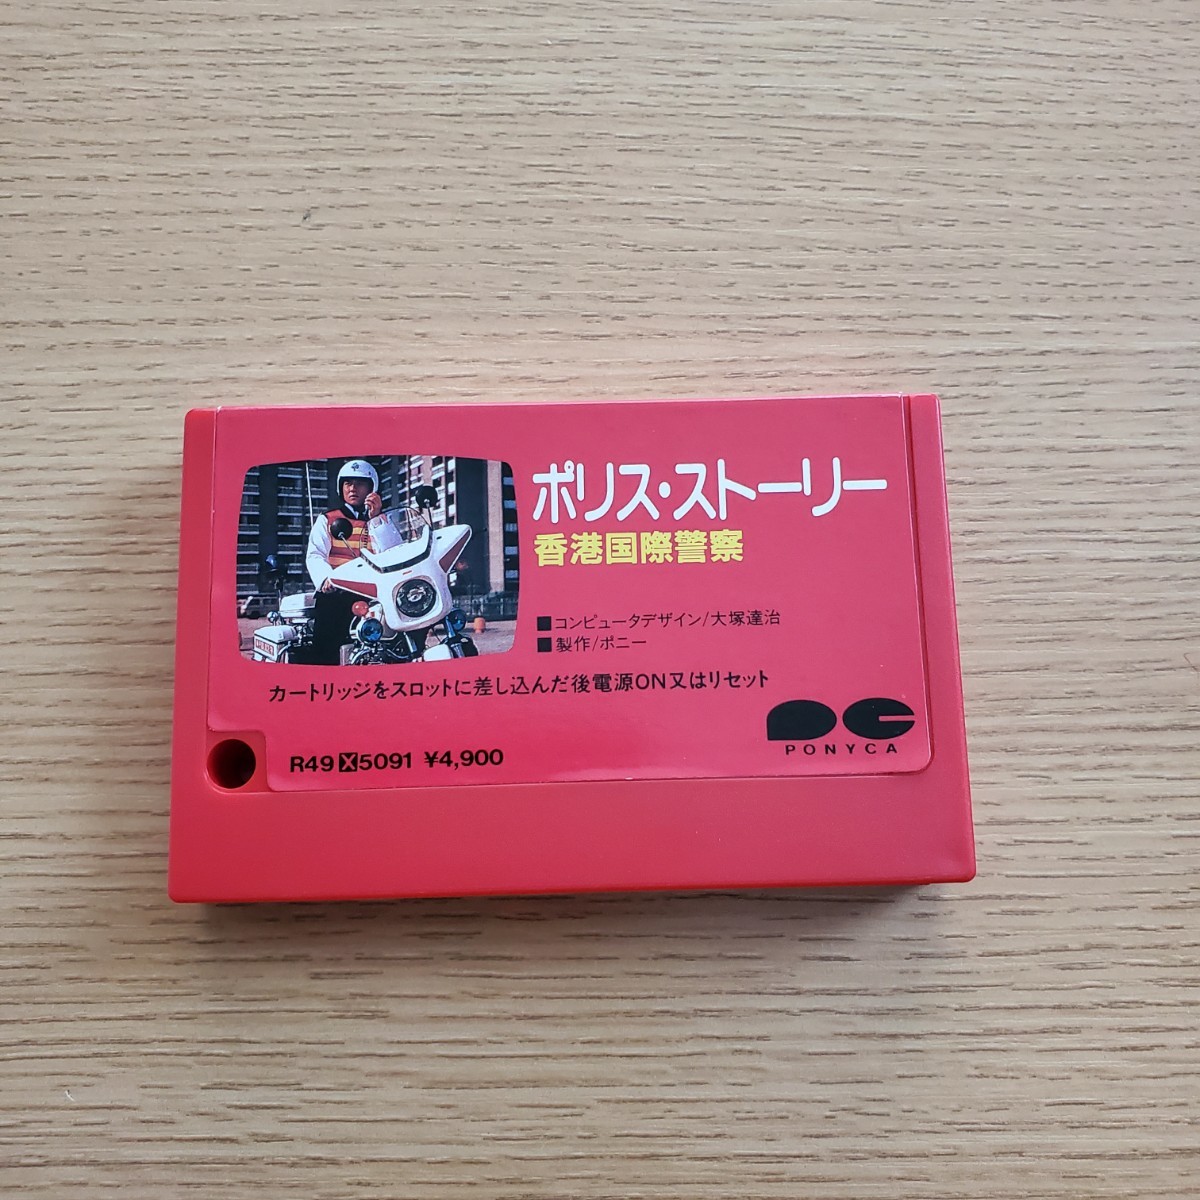 MSX Police * -stroke - Lee Hong Kong international police box opinion post card postage 230 jpy ~ ultra rare jack - changer 